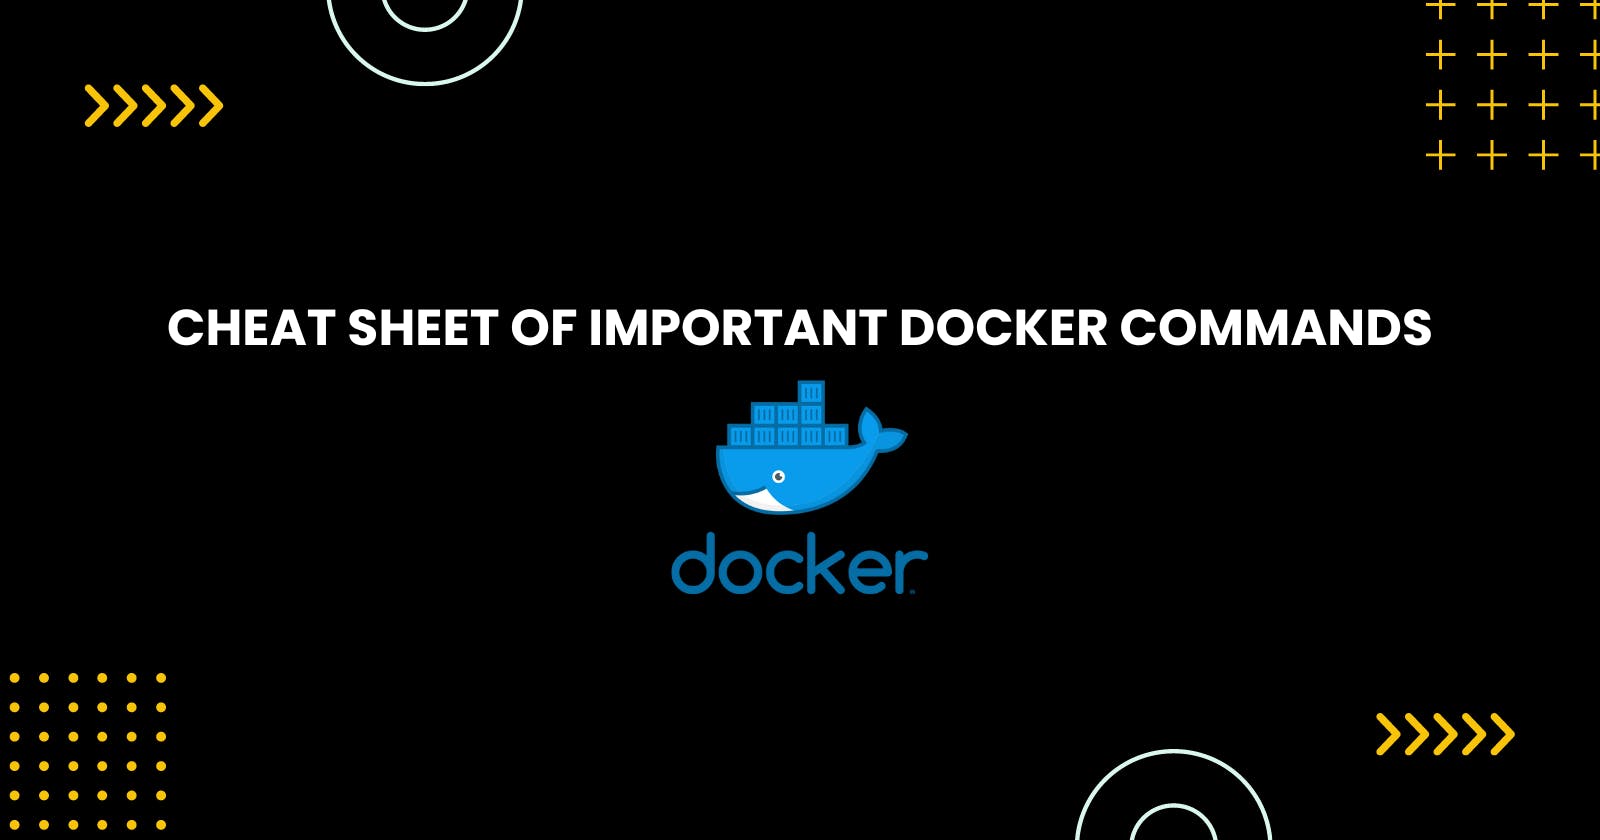 Cheat sheet of important Docker commands